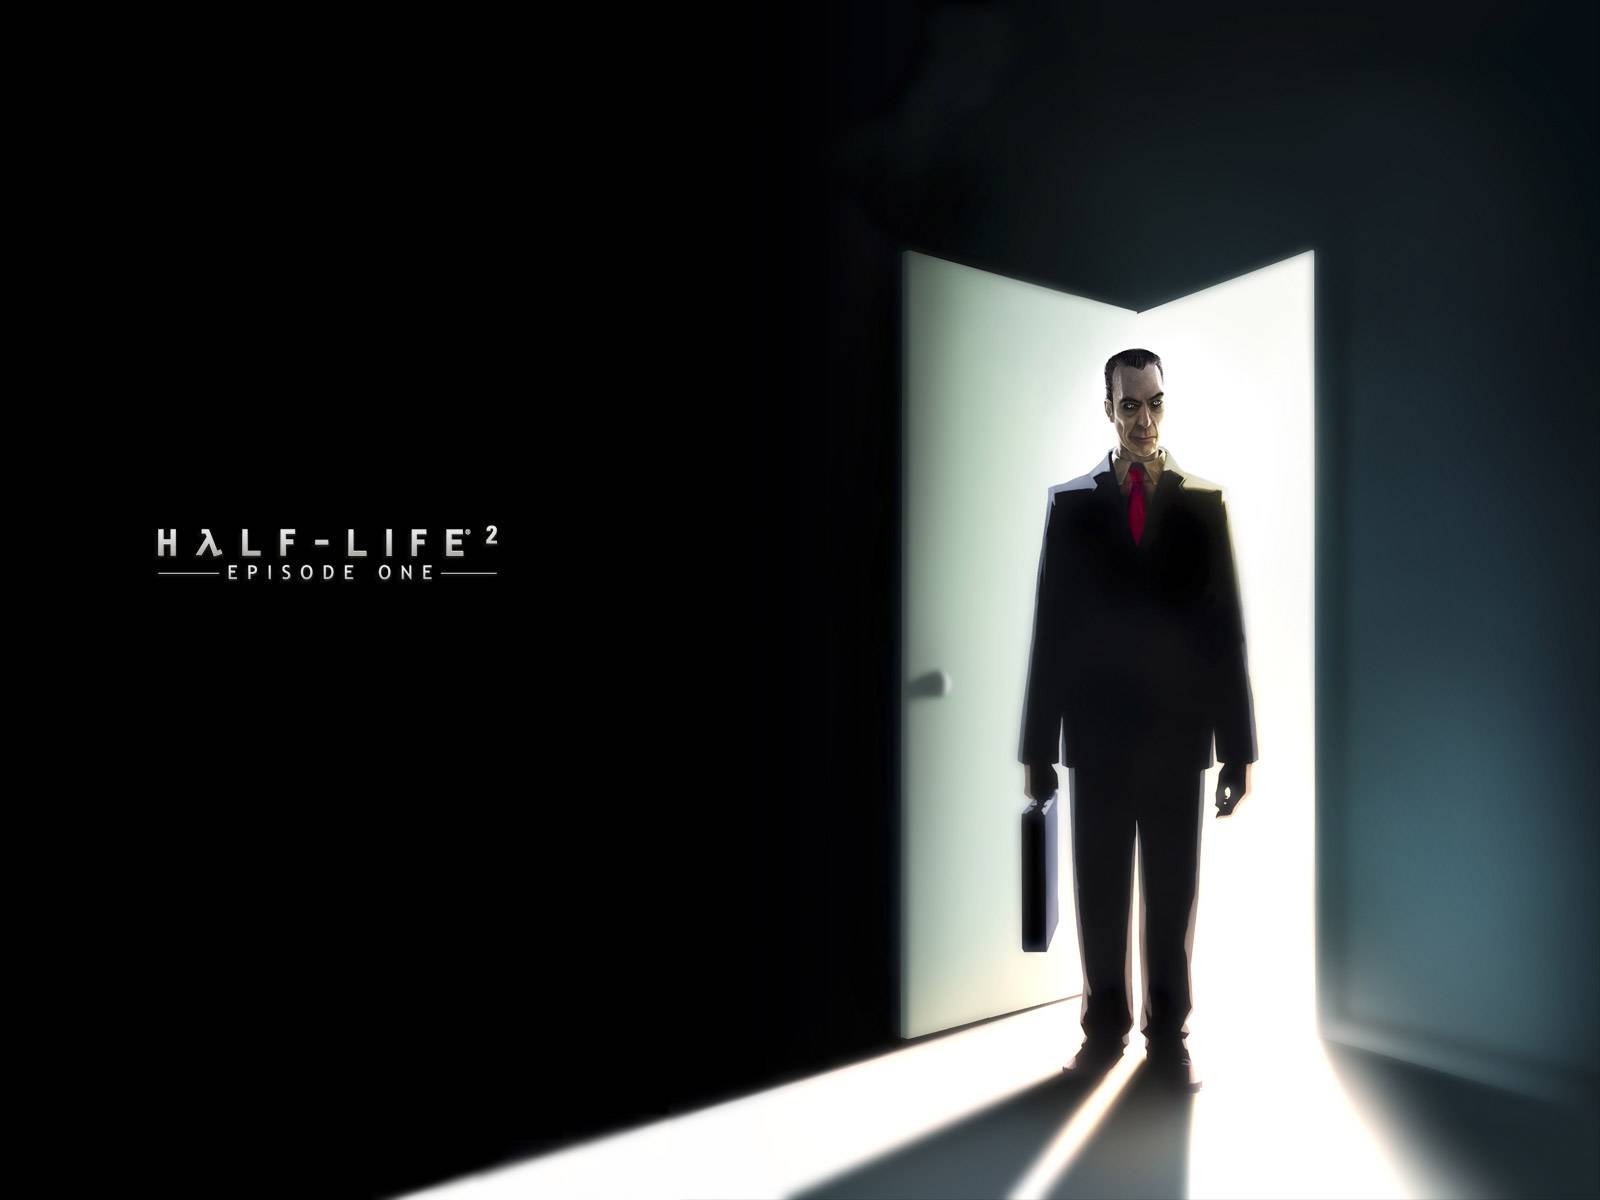 Период Полураспада 2: Эпизоды/ Half-Life 2 Episode 1;2